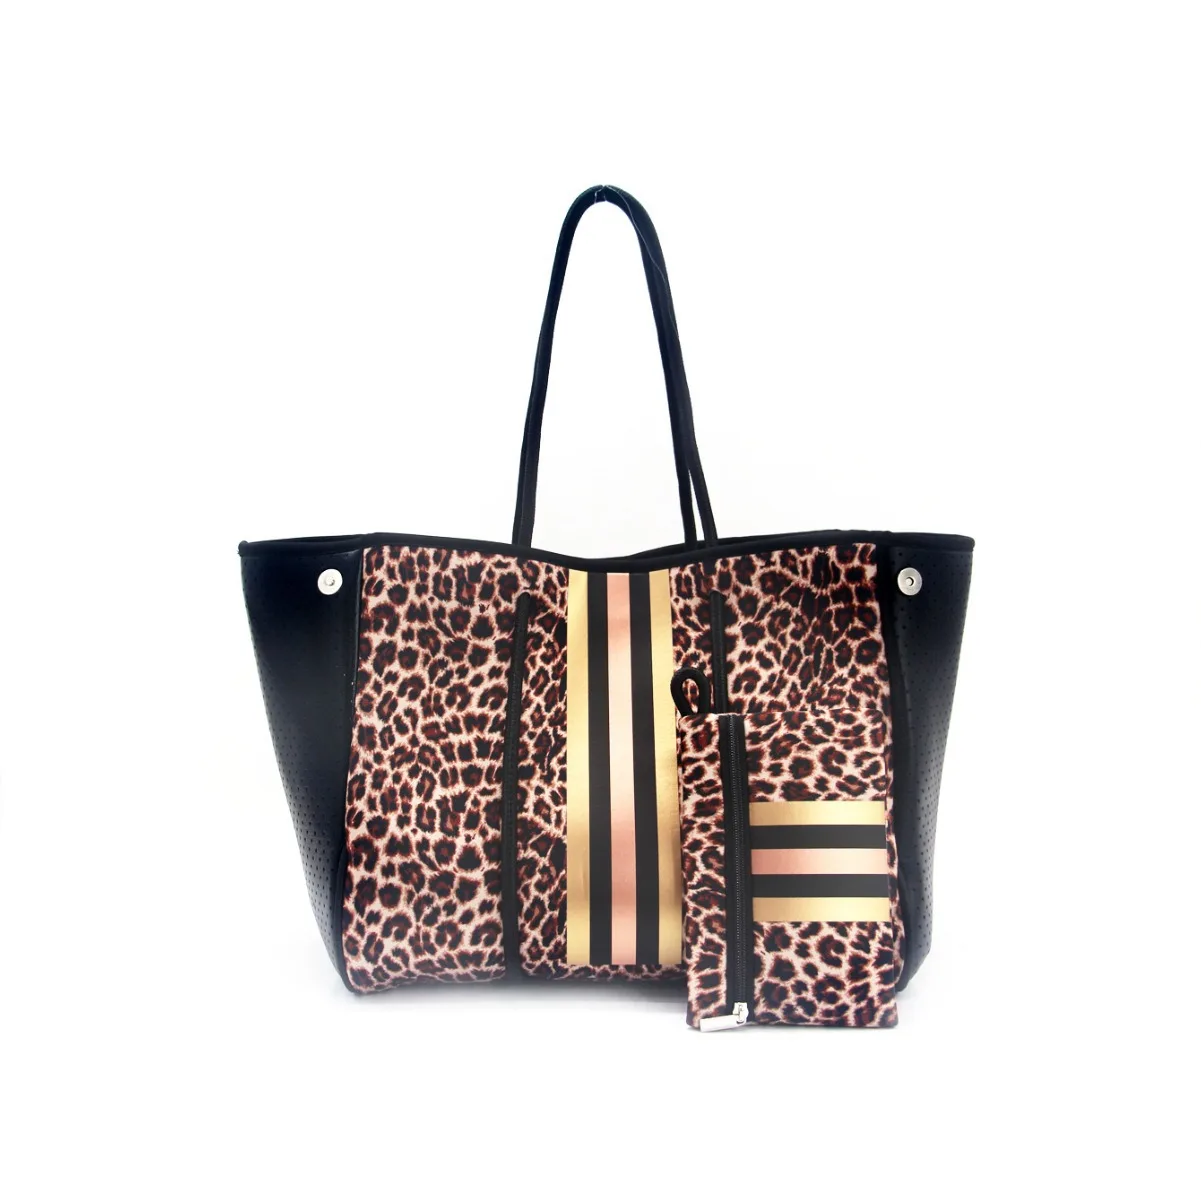 New Desgin Leopard Camouflage Style Neoprene Women Shoulder Handbag Beach Bag for Vacation Travel Beach Camping